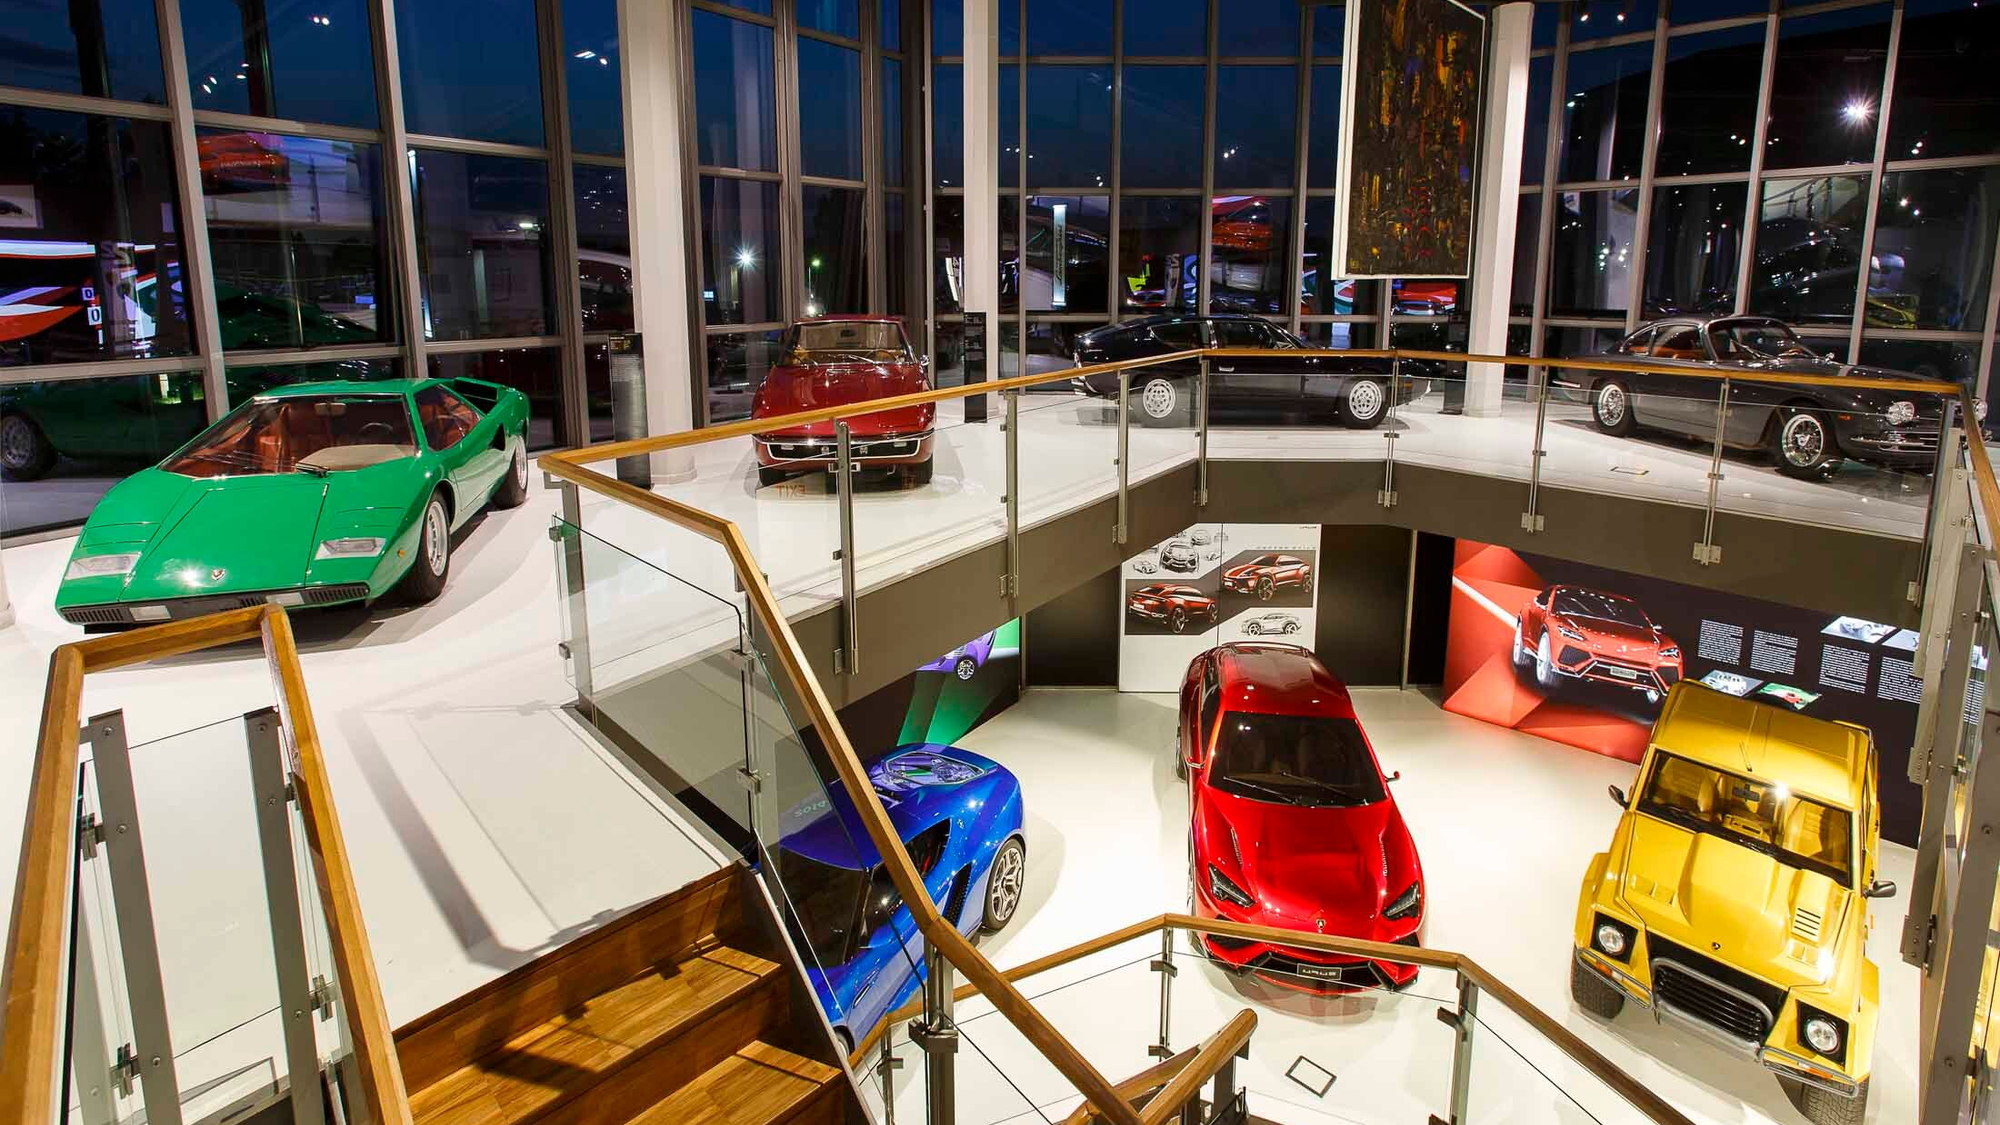 Lamborghini museum in Sant'Agata Bolognese, Italy